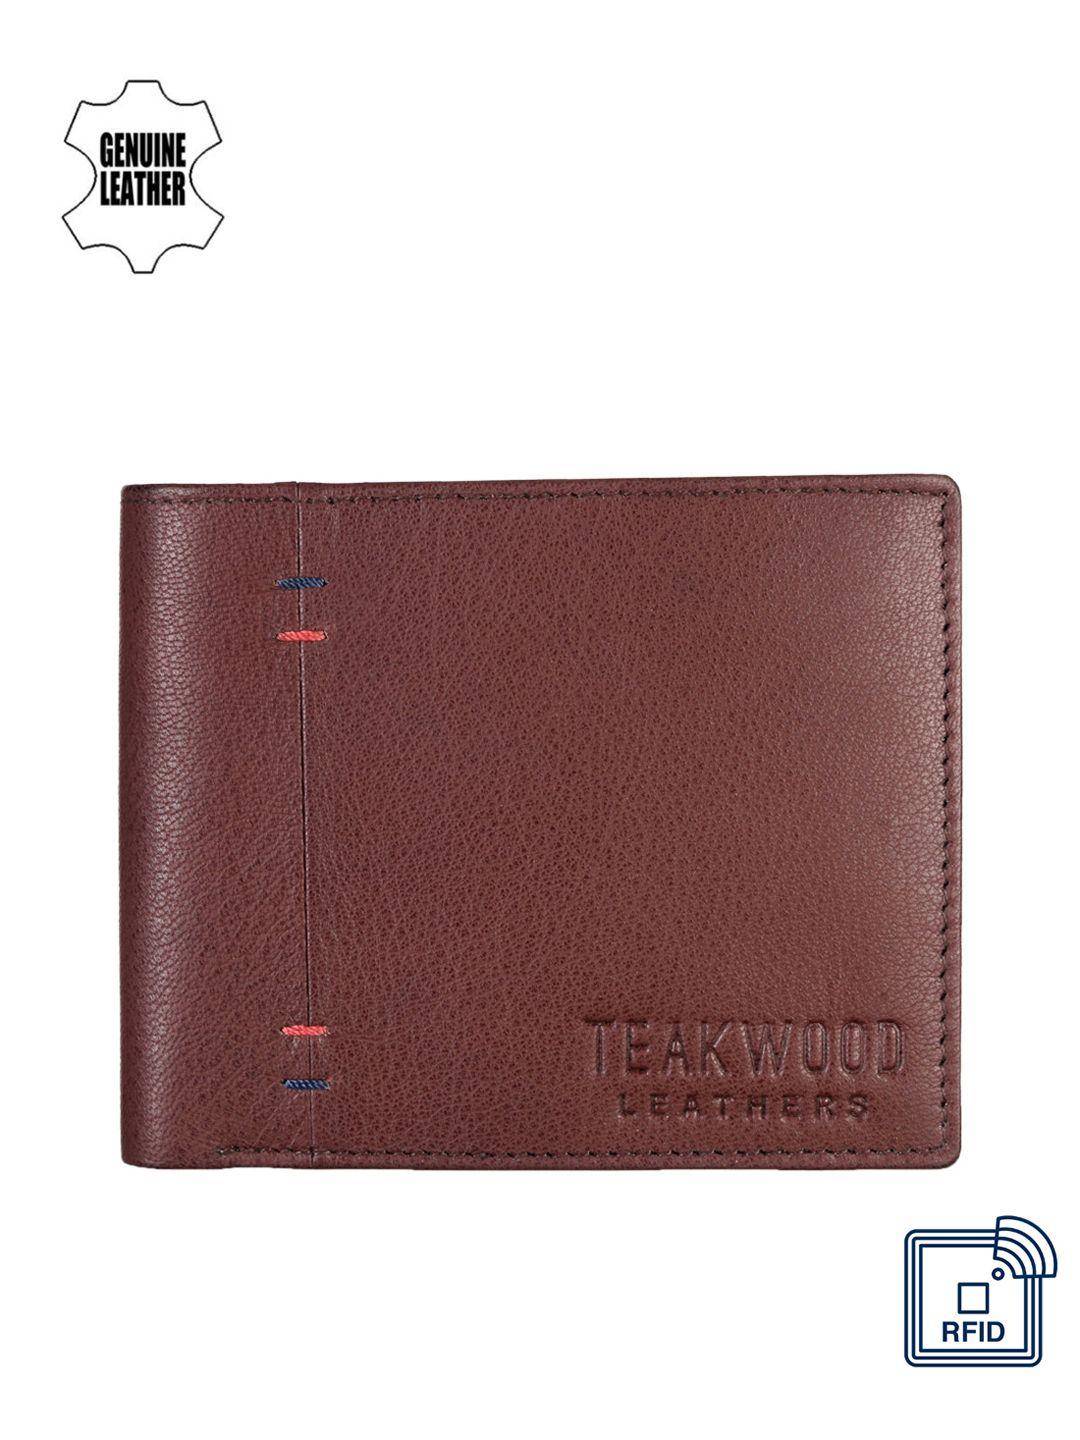 teakwood leather men brown leather wallet